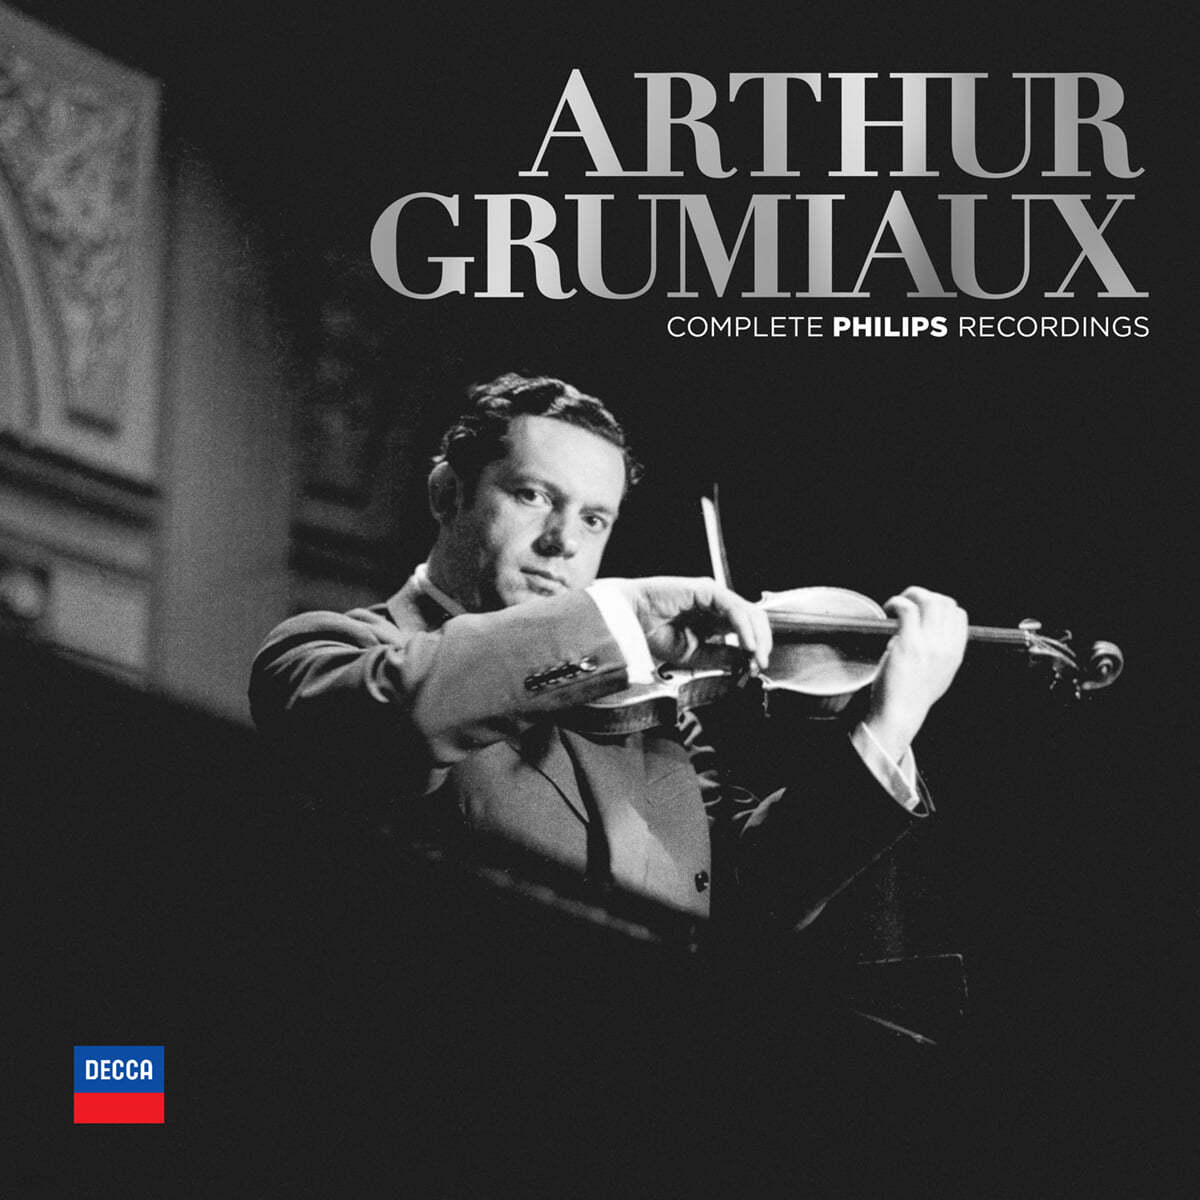 Arthur Grumiaux 아르투르 그뤼미오 - 필립스 녹음 전집 (Complete Philips Recordings) 